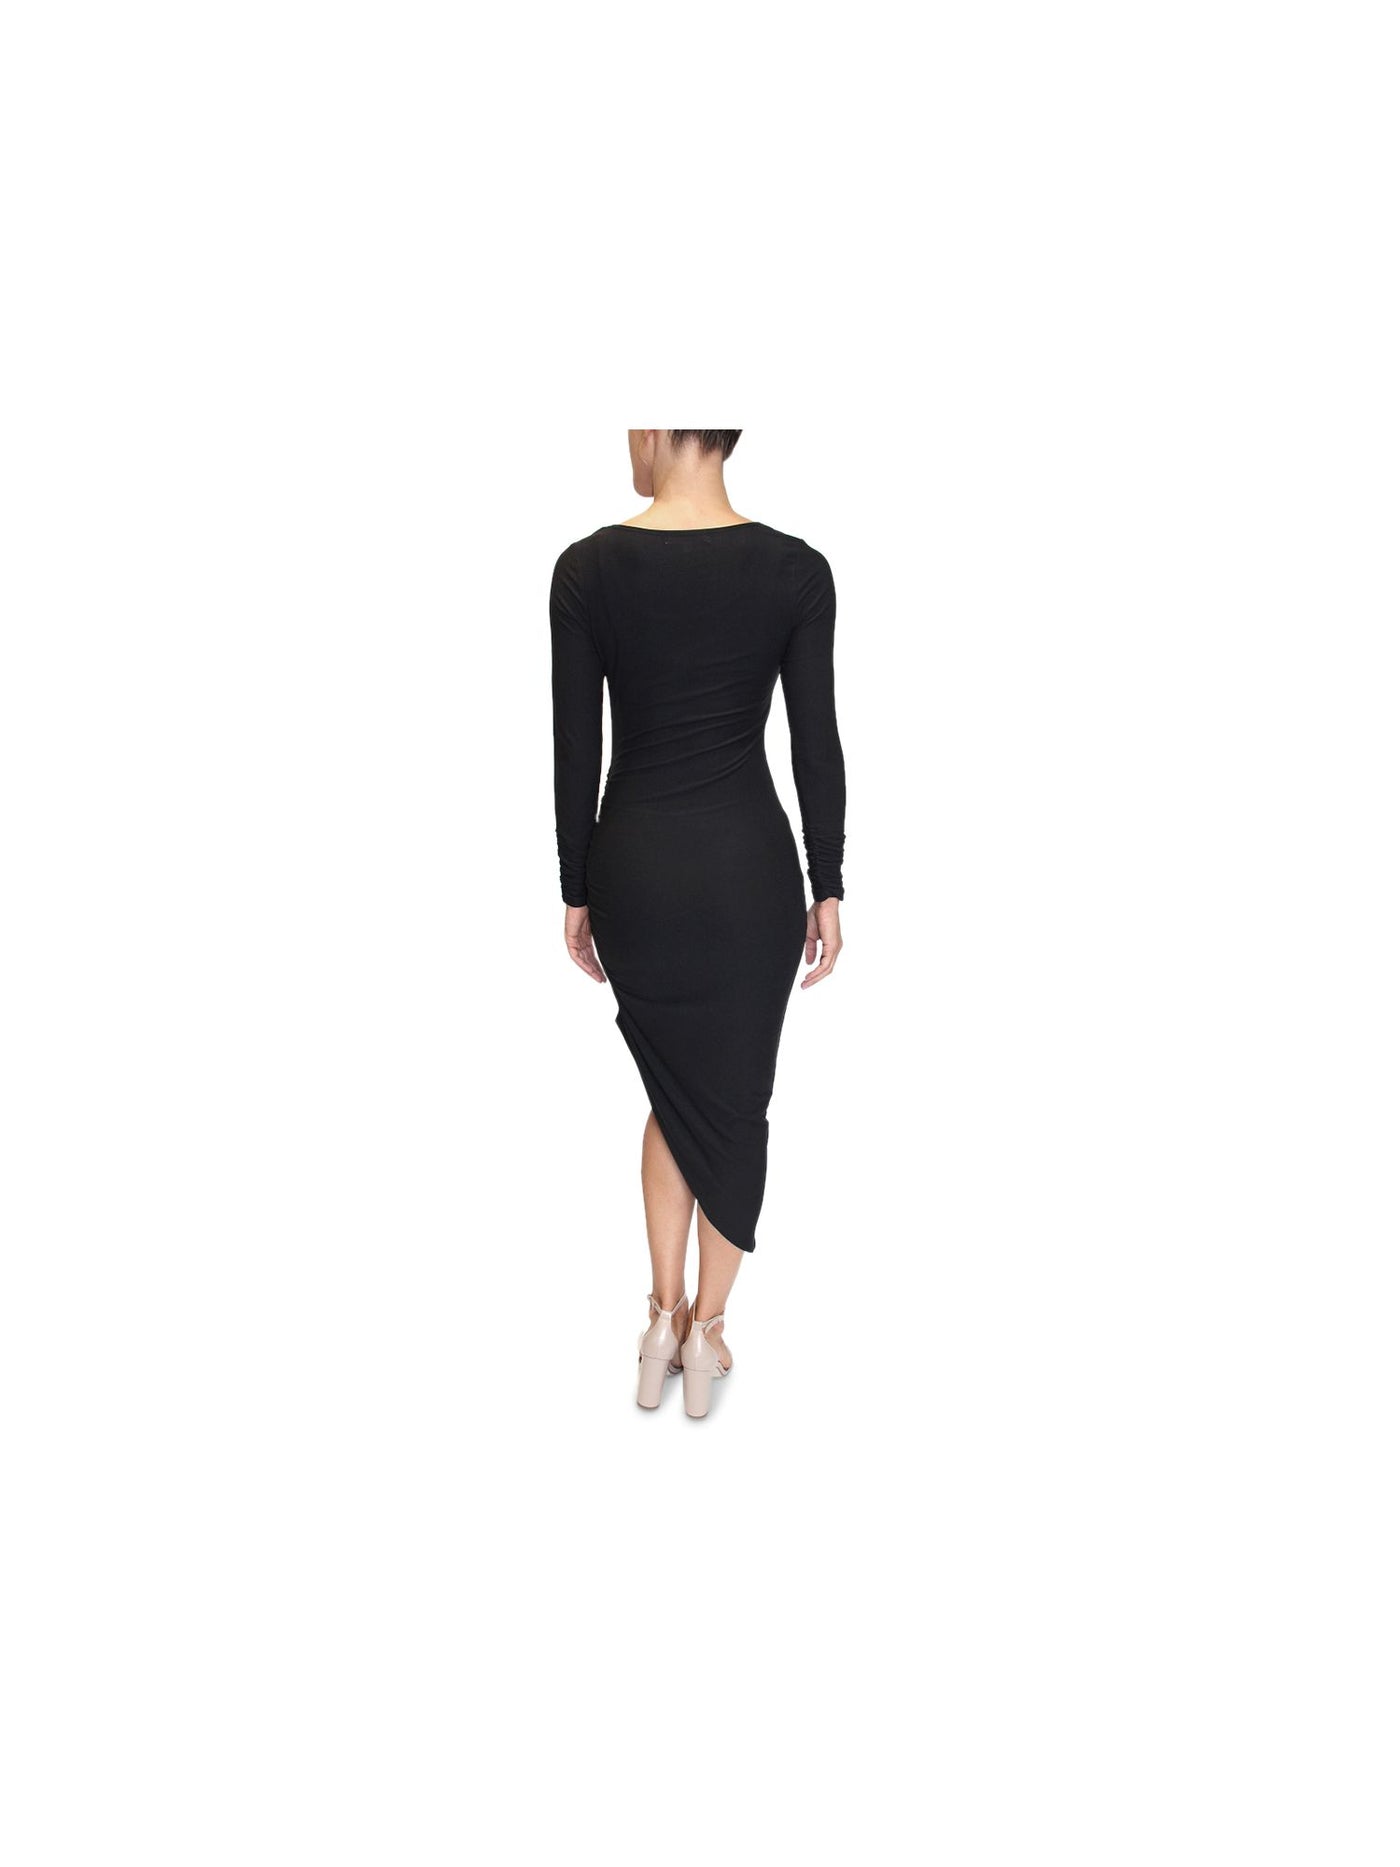 ALMOST FAMOUS Womens Black Long Sleeve Scoop Neck Midi Evening Body Con Dress Juniors M